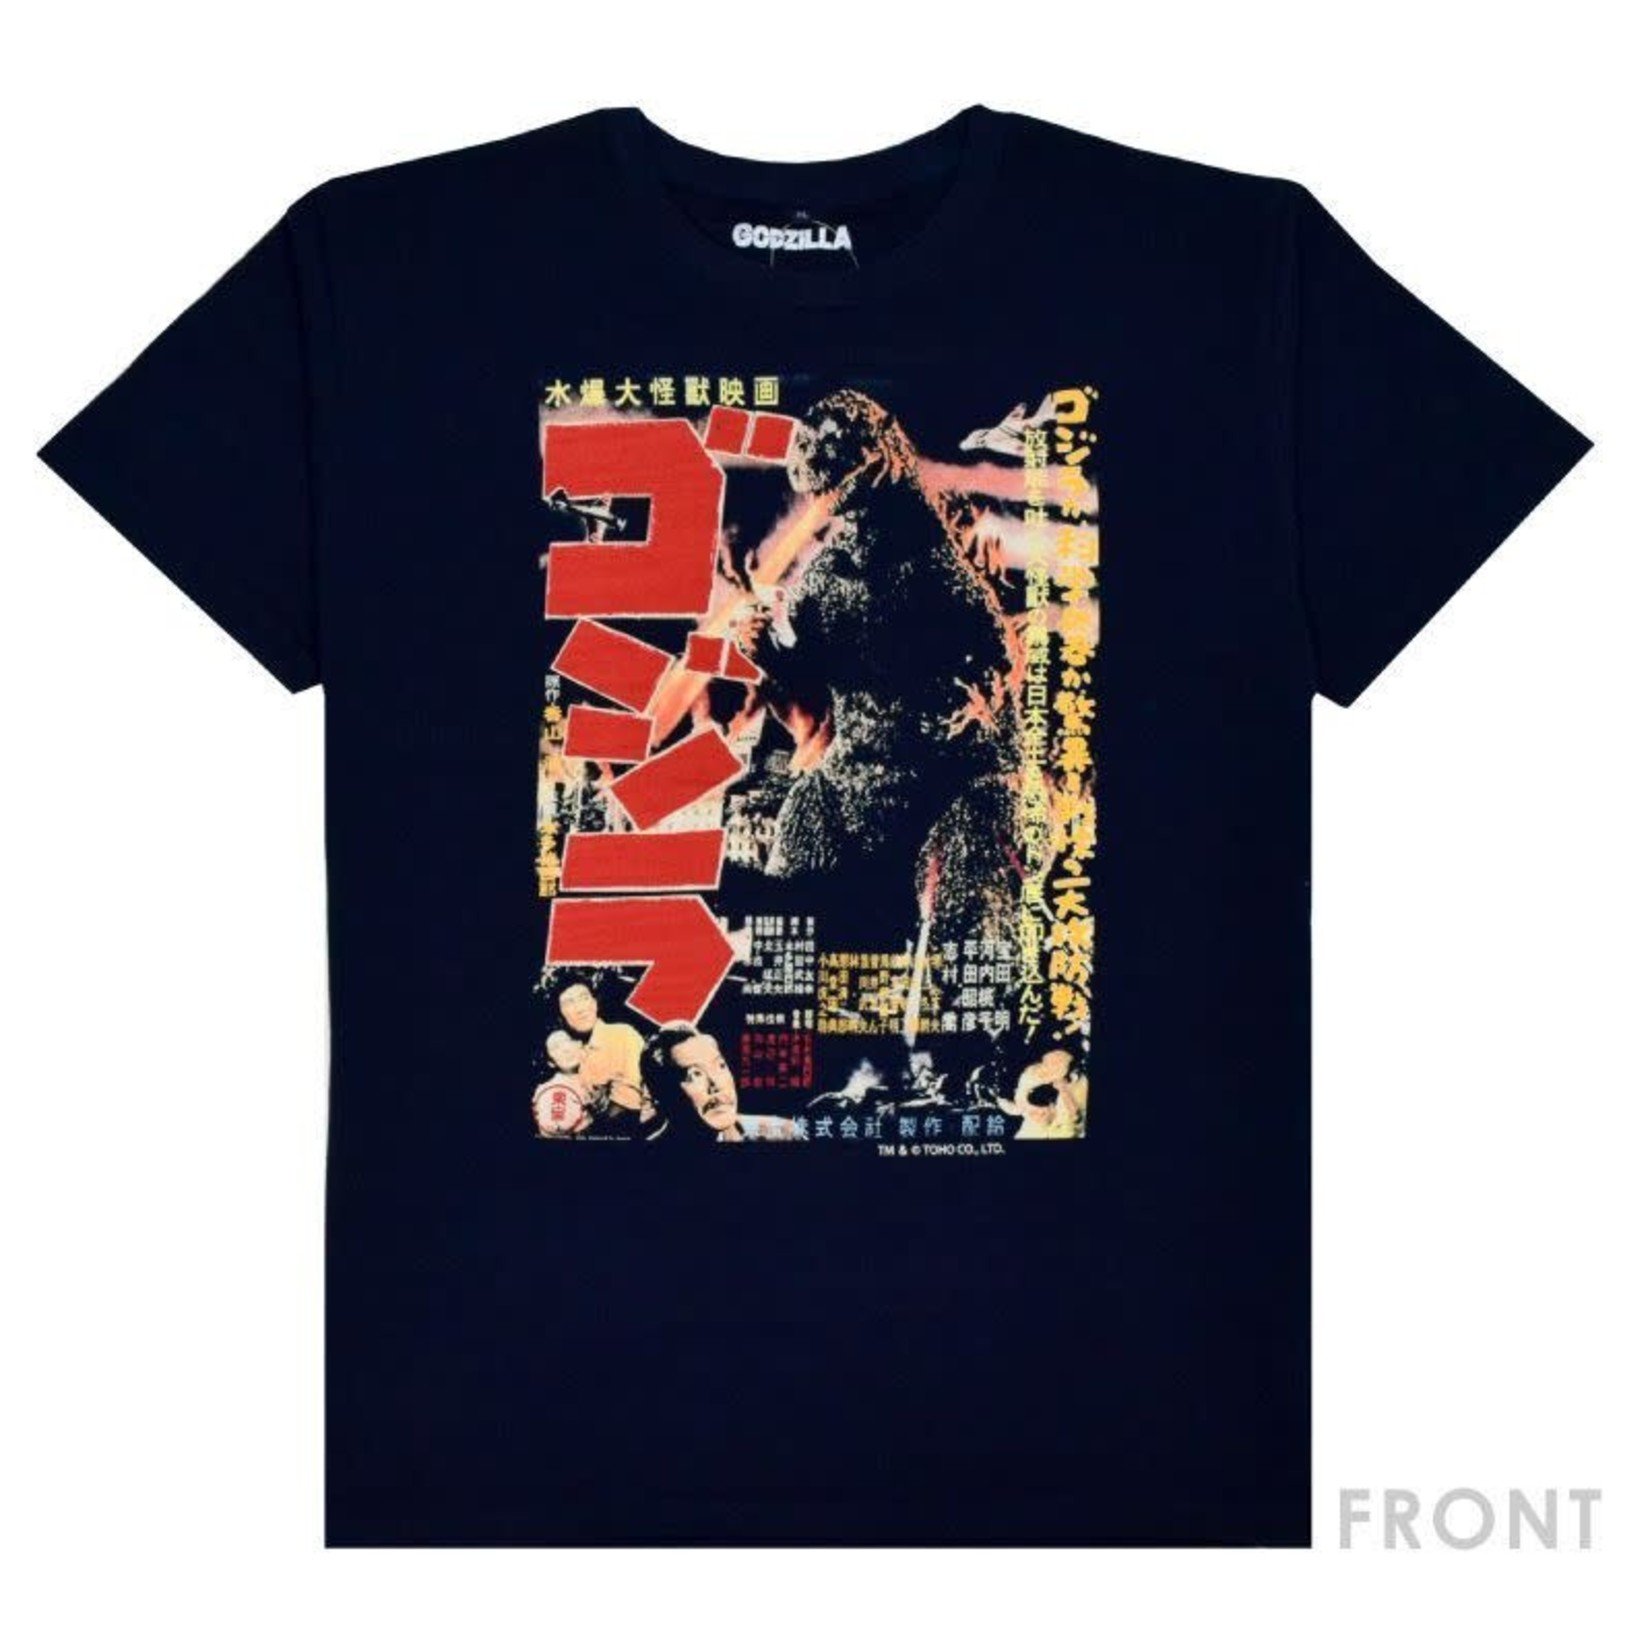 Toho Co. LTD T-Shirt - "First Godzilla" Movie Poster - 508954